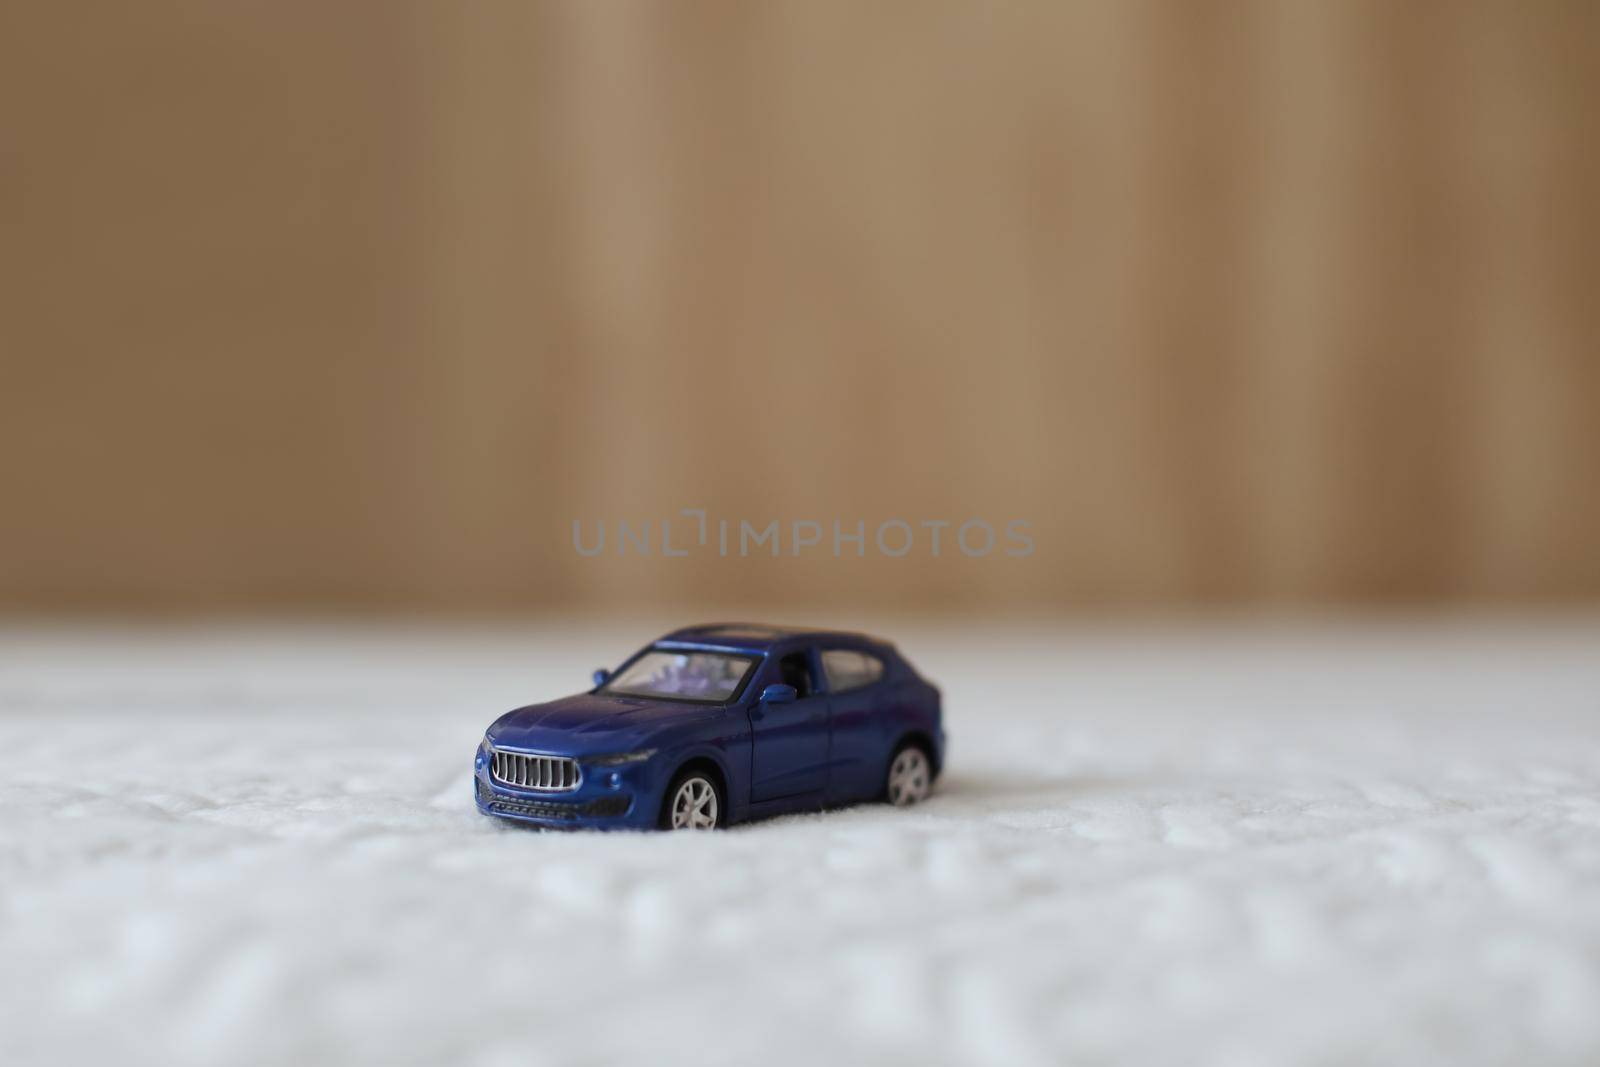 Miniature blue plastic toy car on textile material macro shot. close-up.